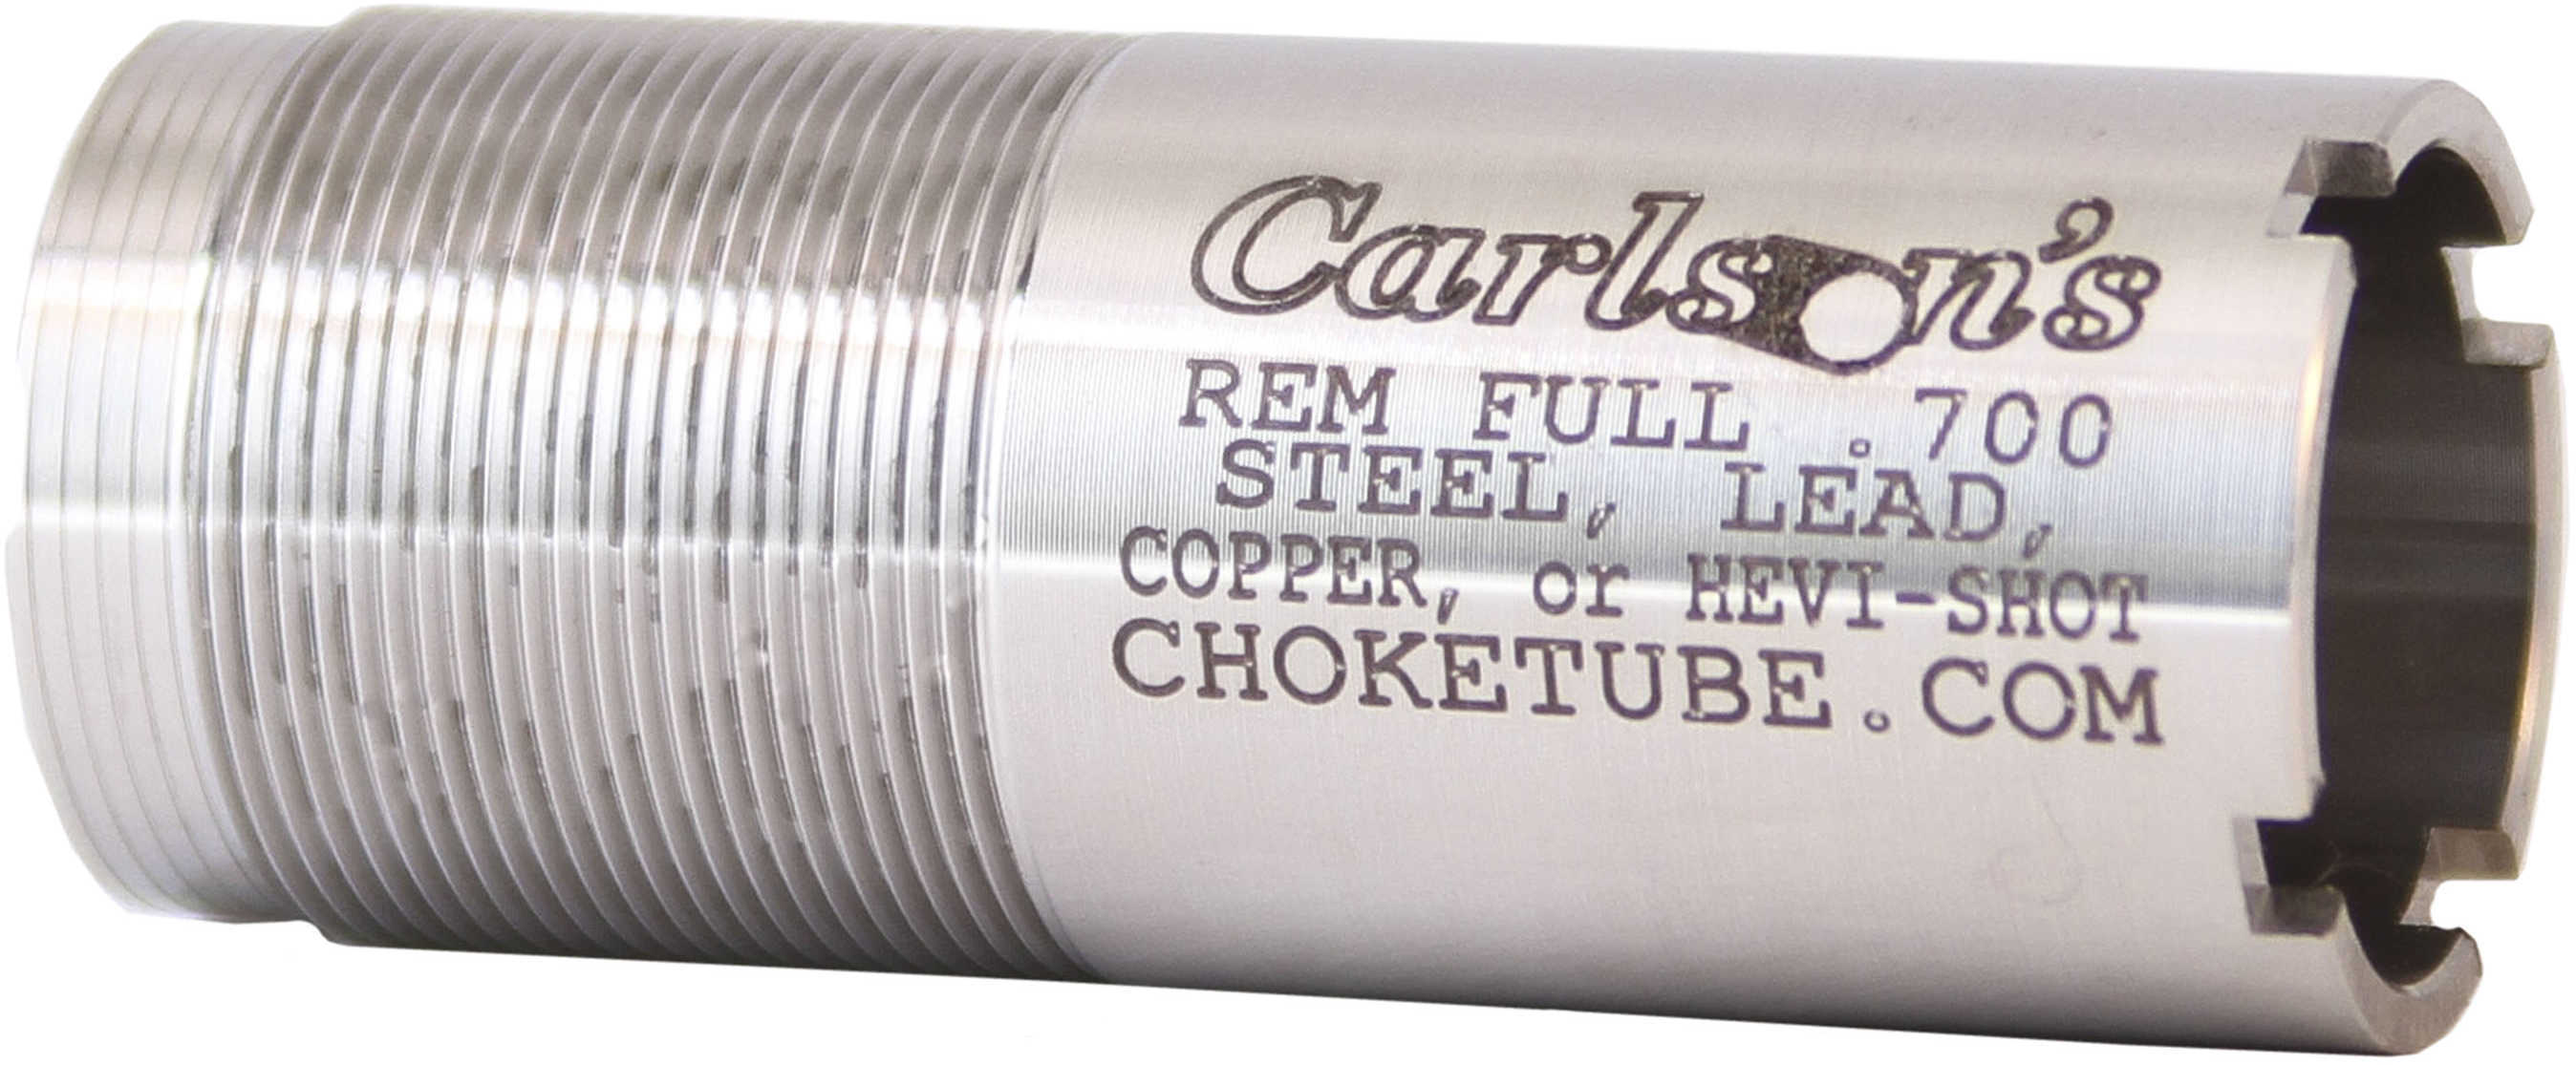 Carlsons Remington Flush Choke Tube 12 Gauge, Full Md: 52263